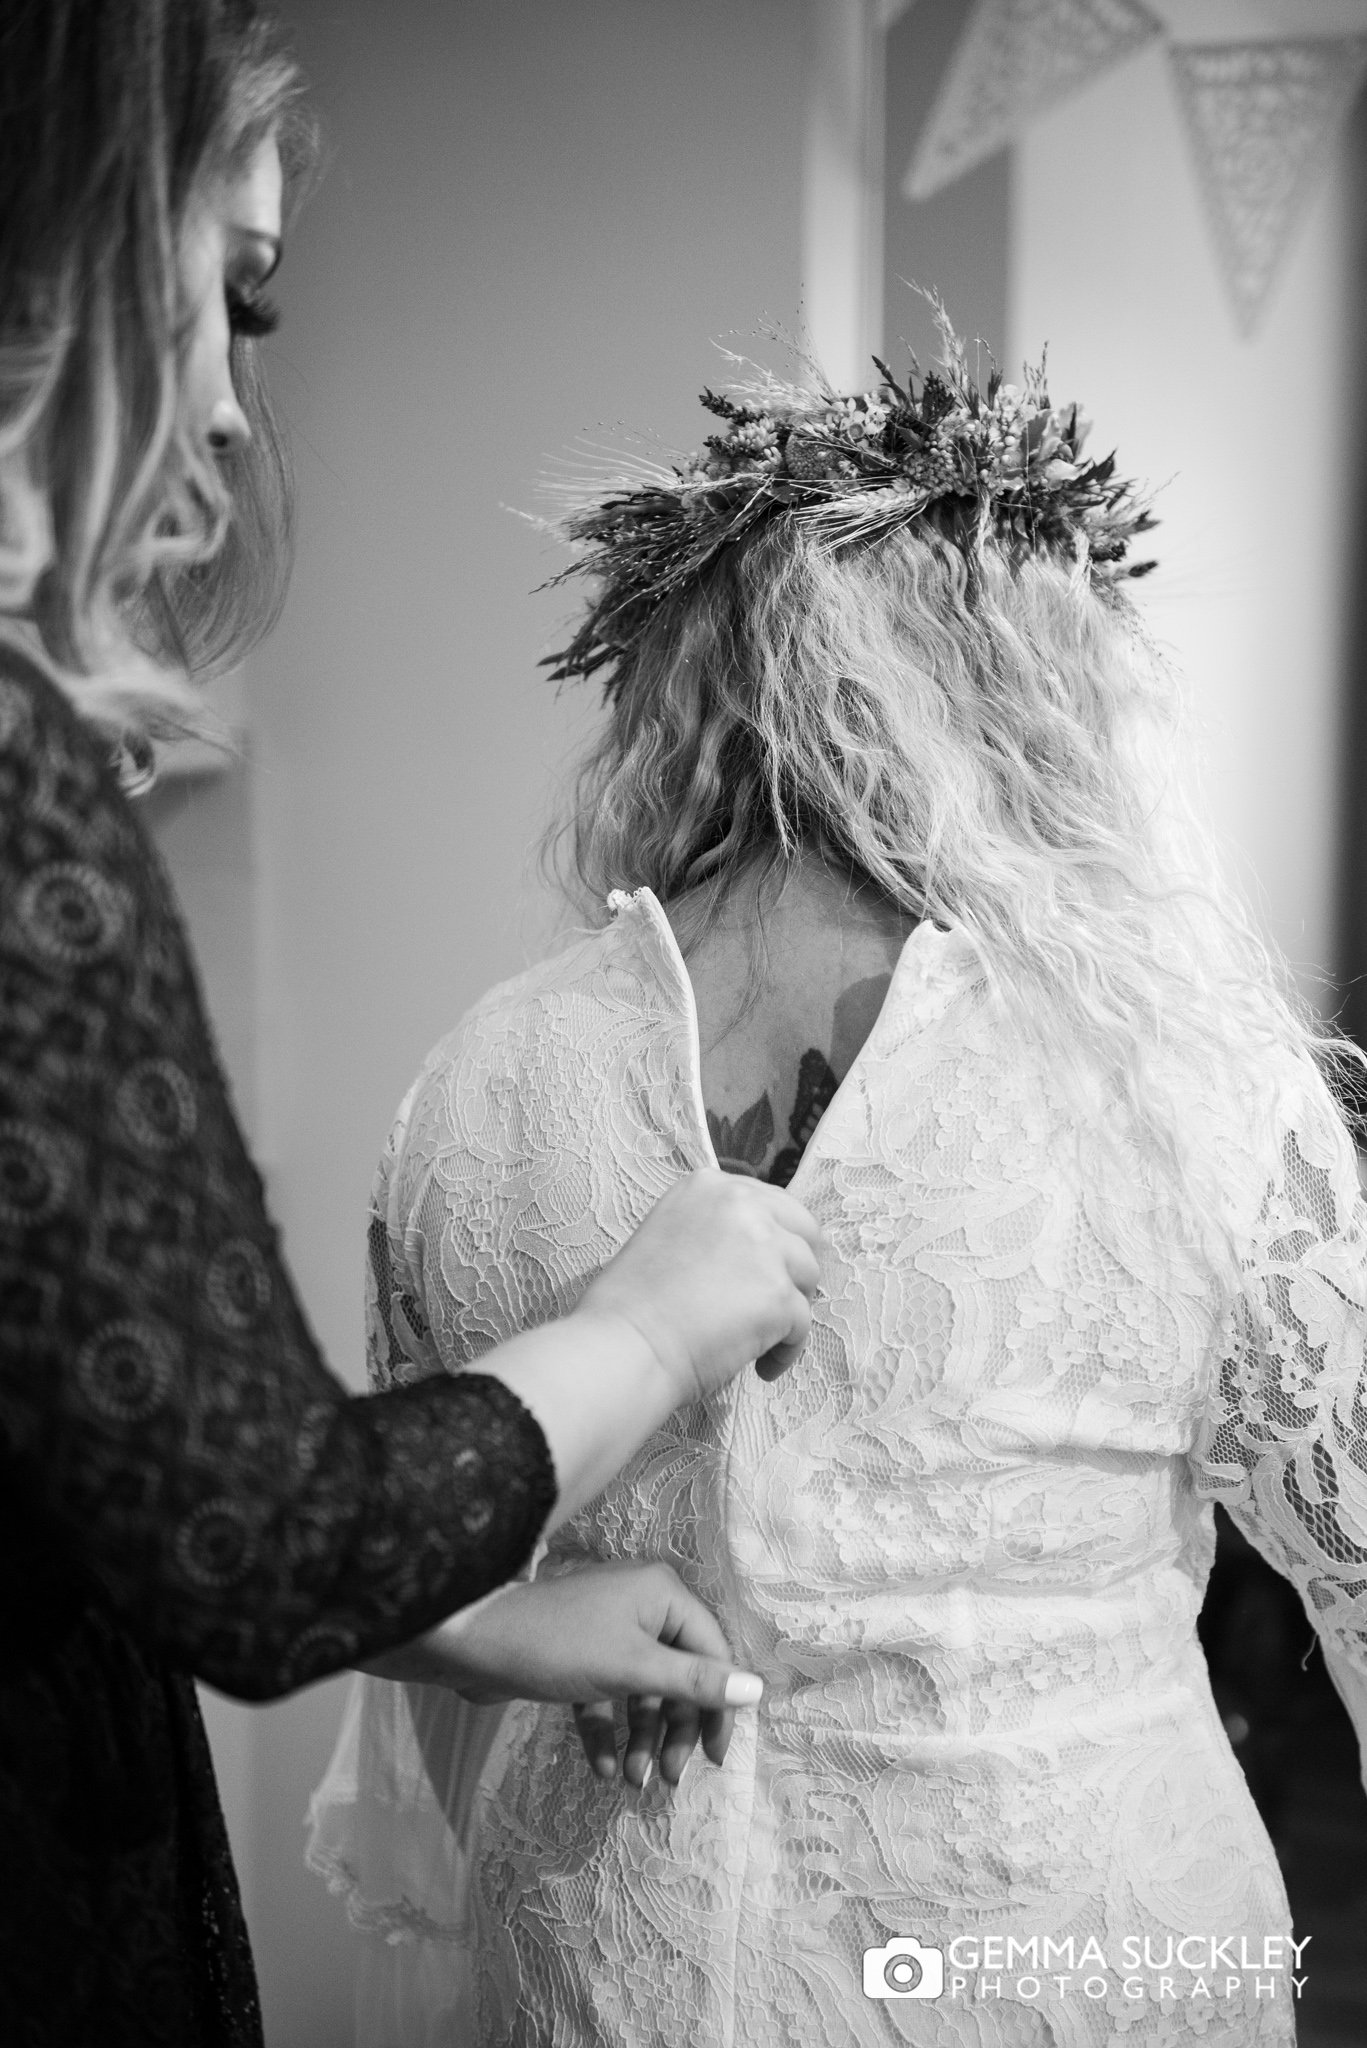 a bridesmaid zipping up the brides dress